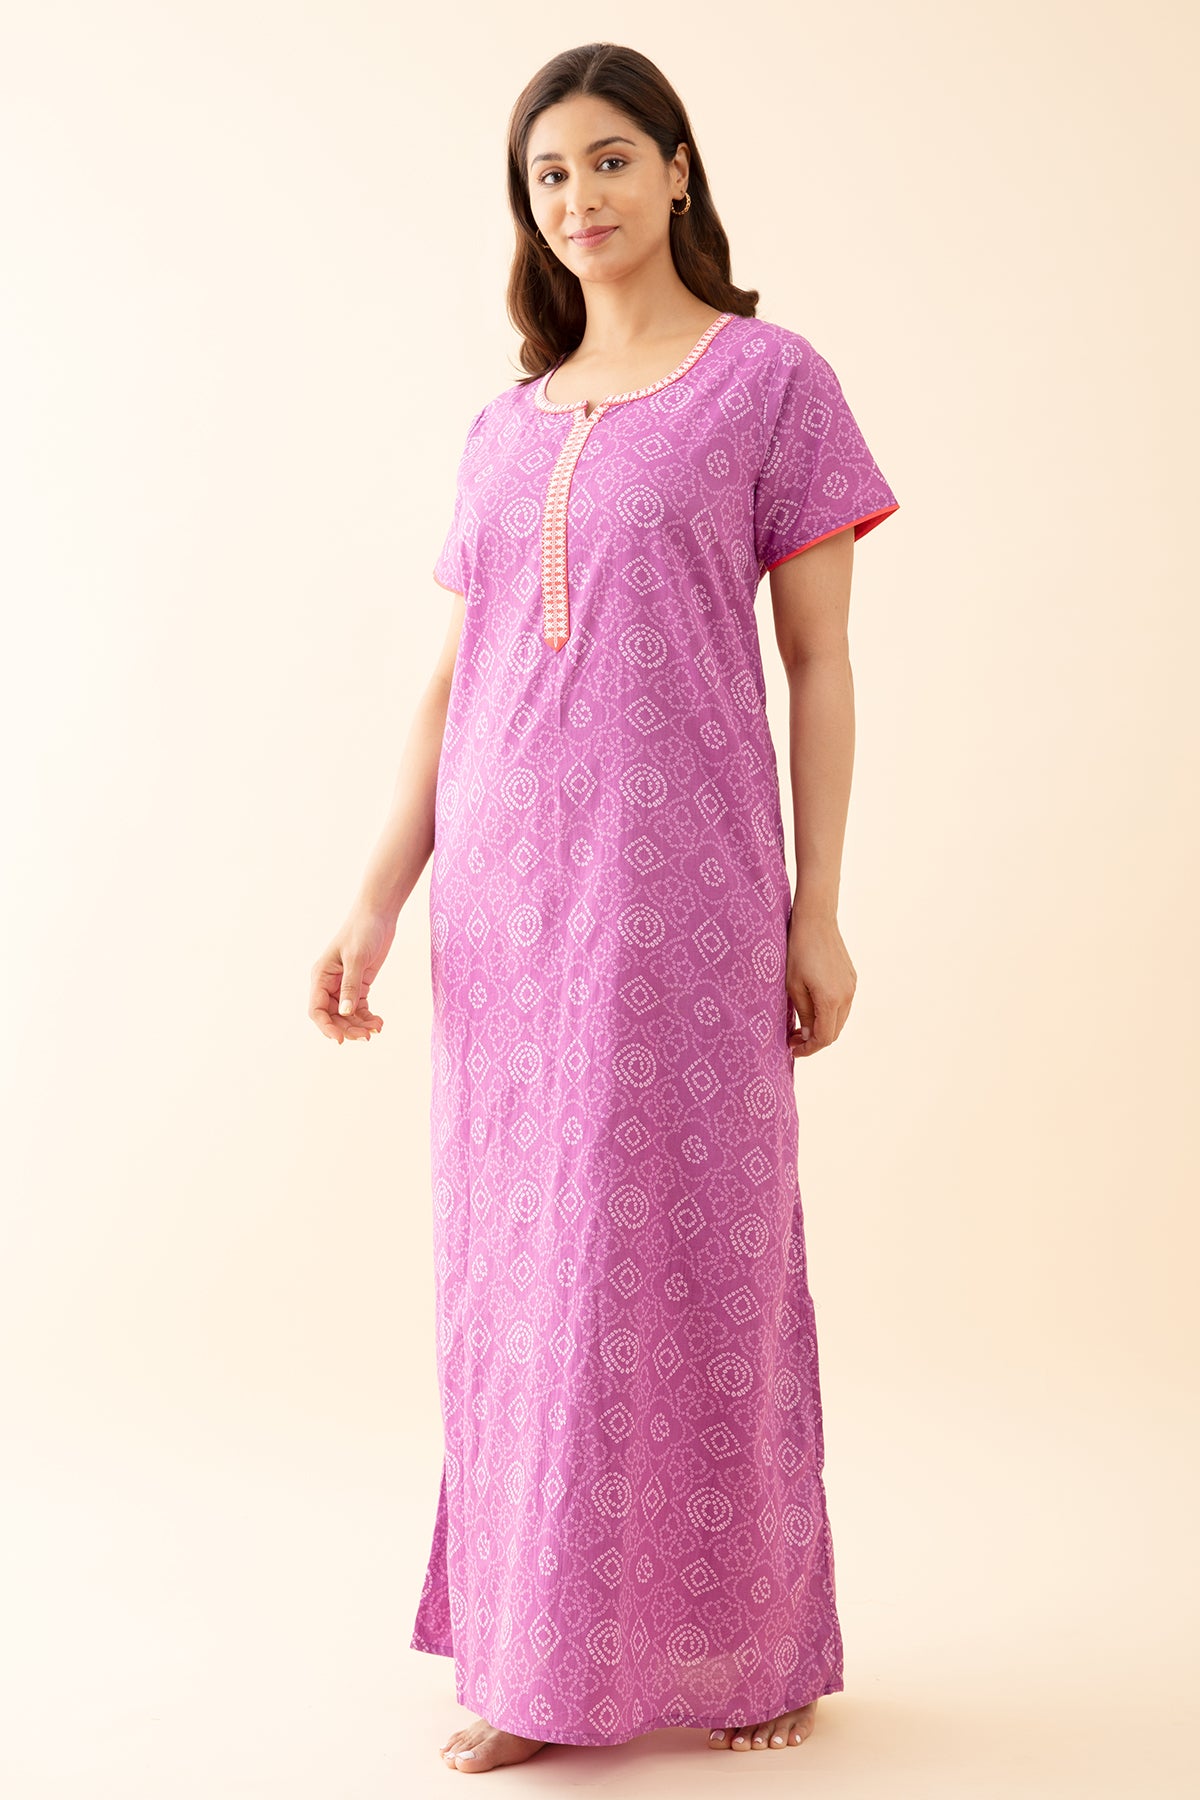 Bandhani Printed Nighty with Contrast Embroidered Yoke - Purple